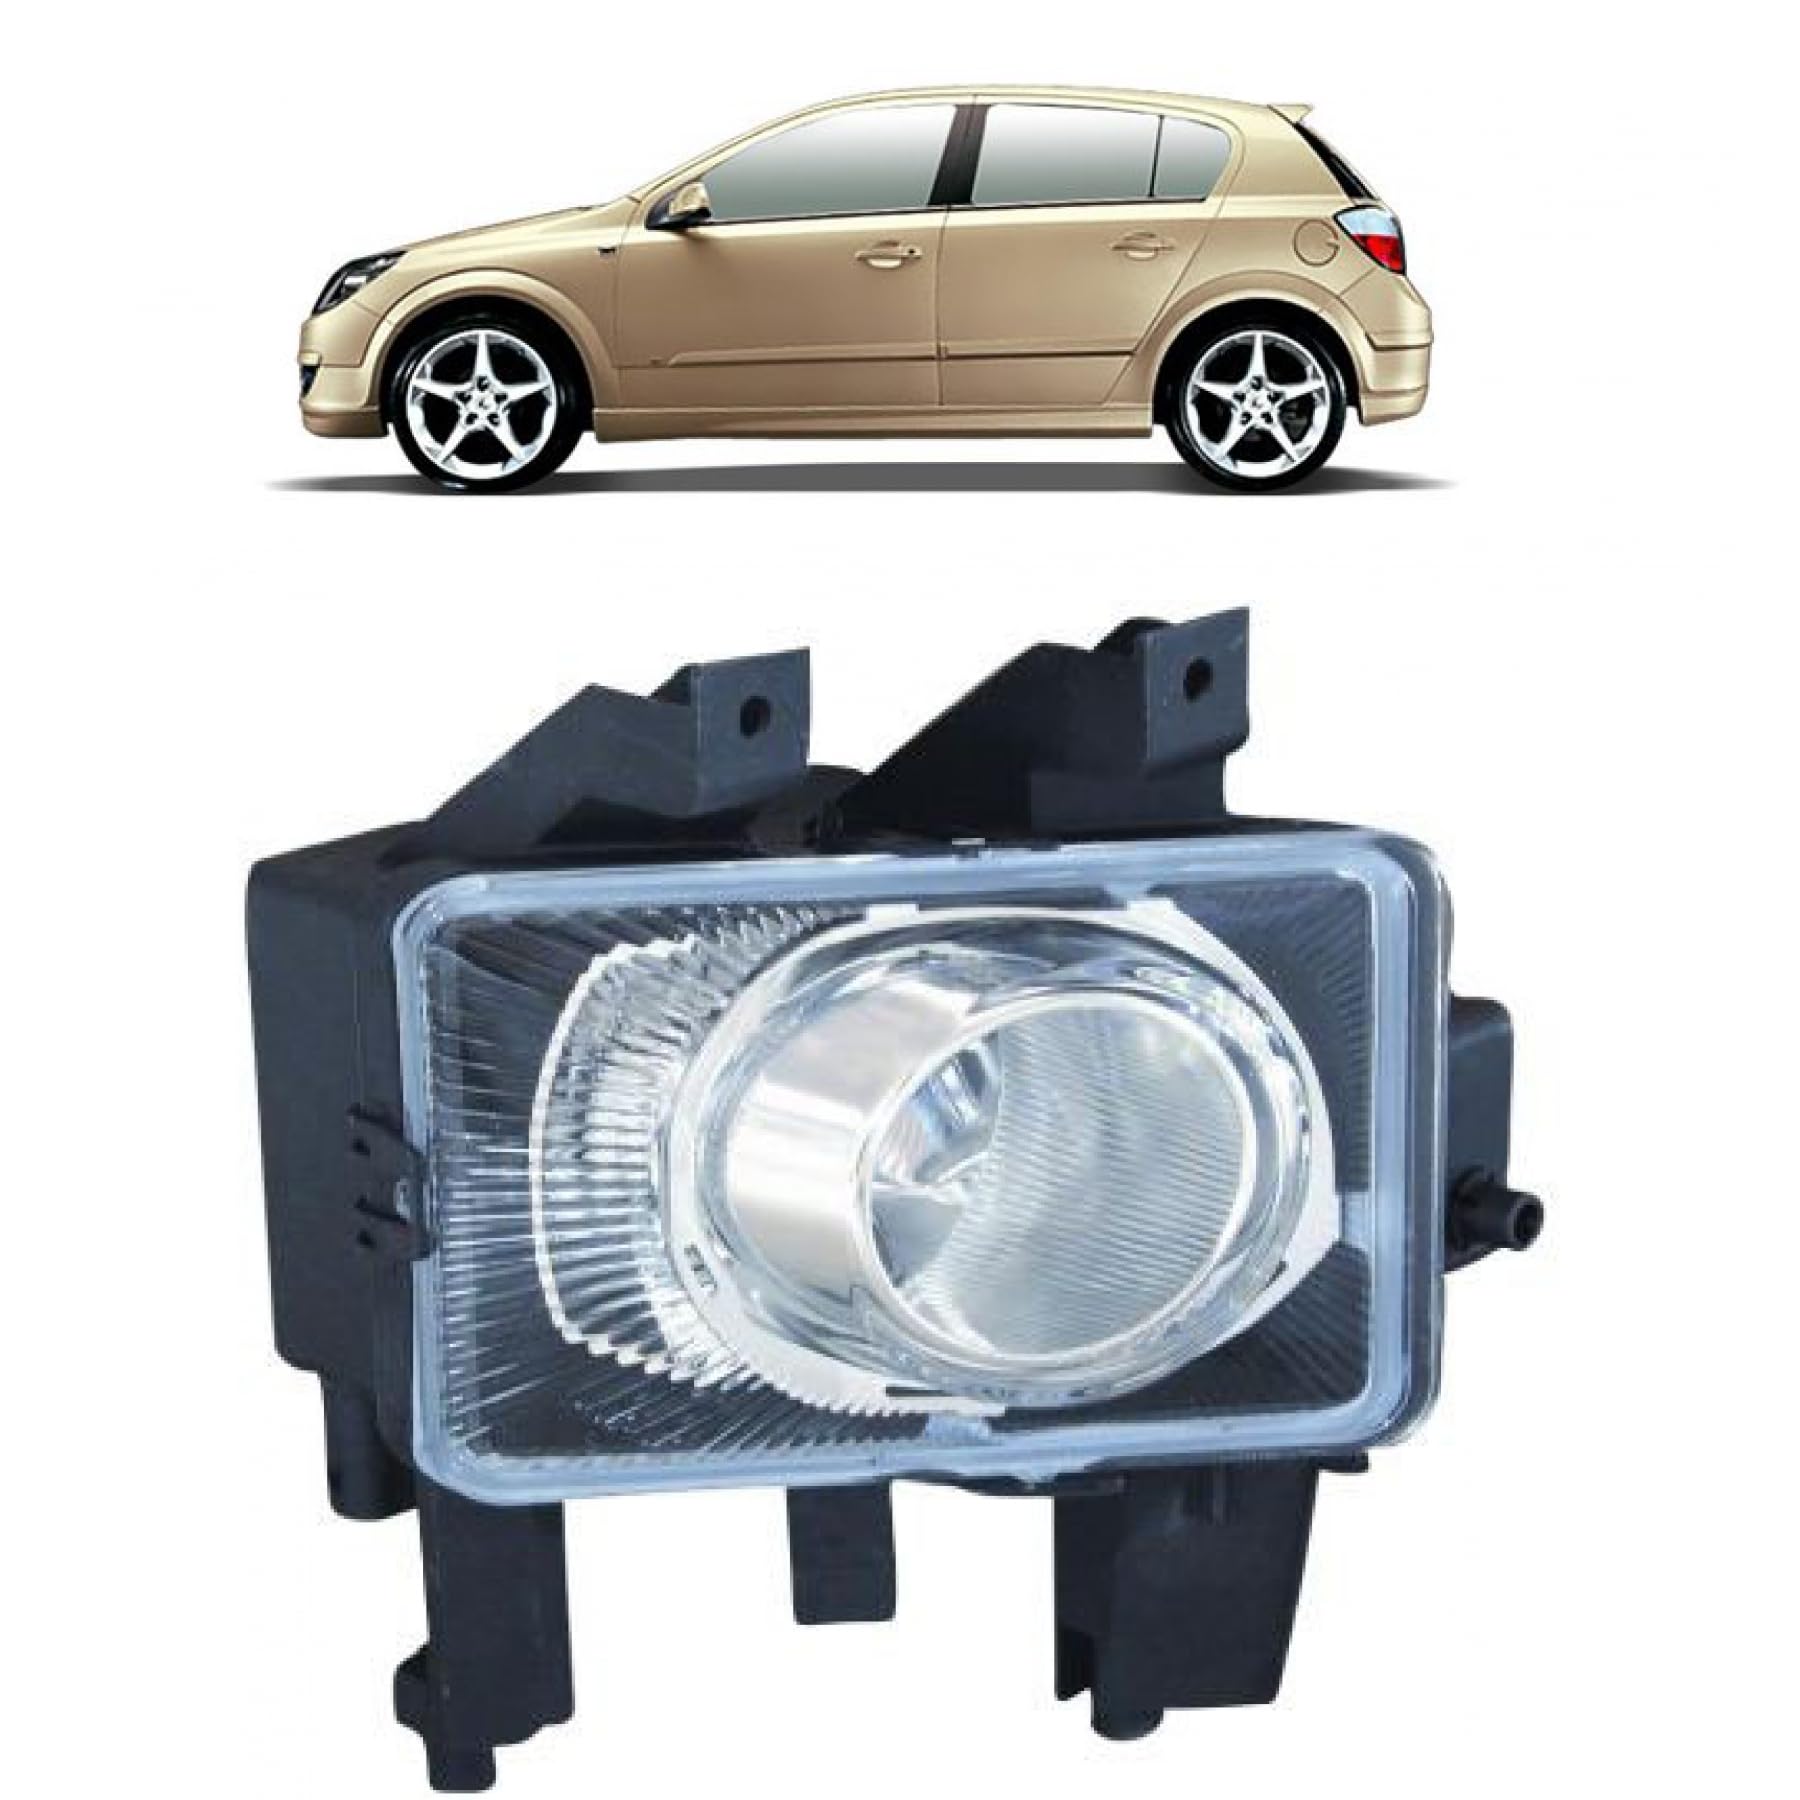 DM Autoteile 108443 Nebelscheinwerfer rechts kompatibel für Opel Astra H A04 Caravan TwinTop Kombi L70 Zafira von DM Autoteile